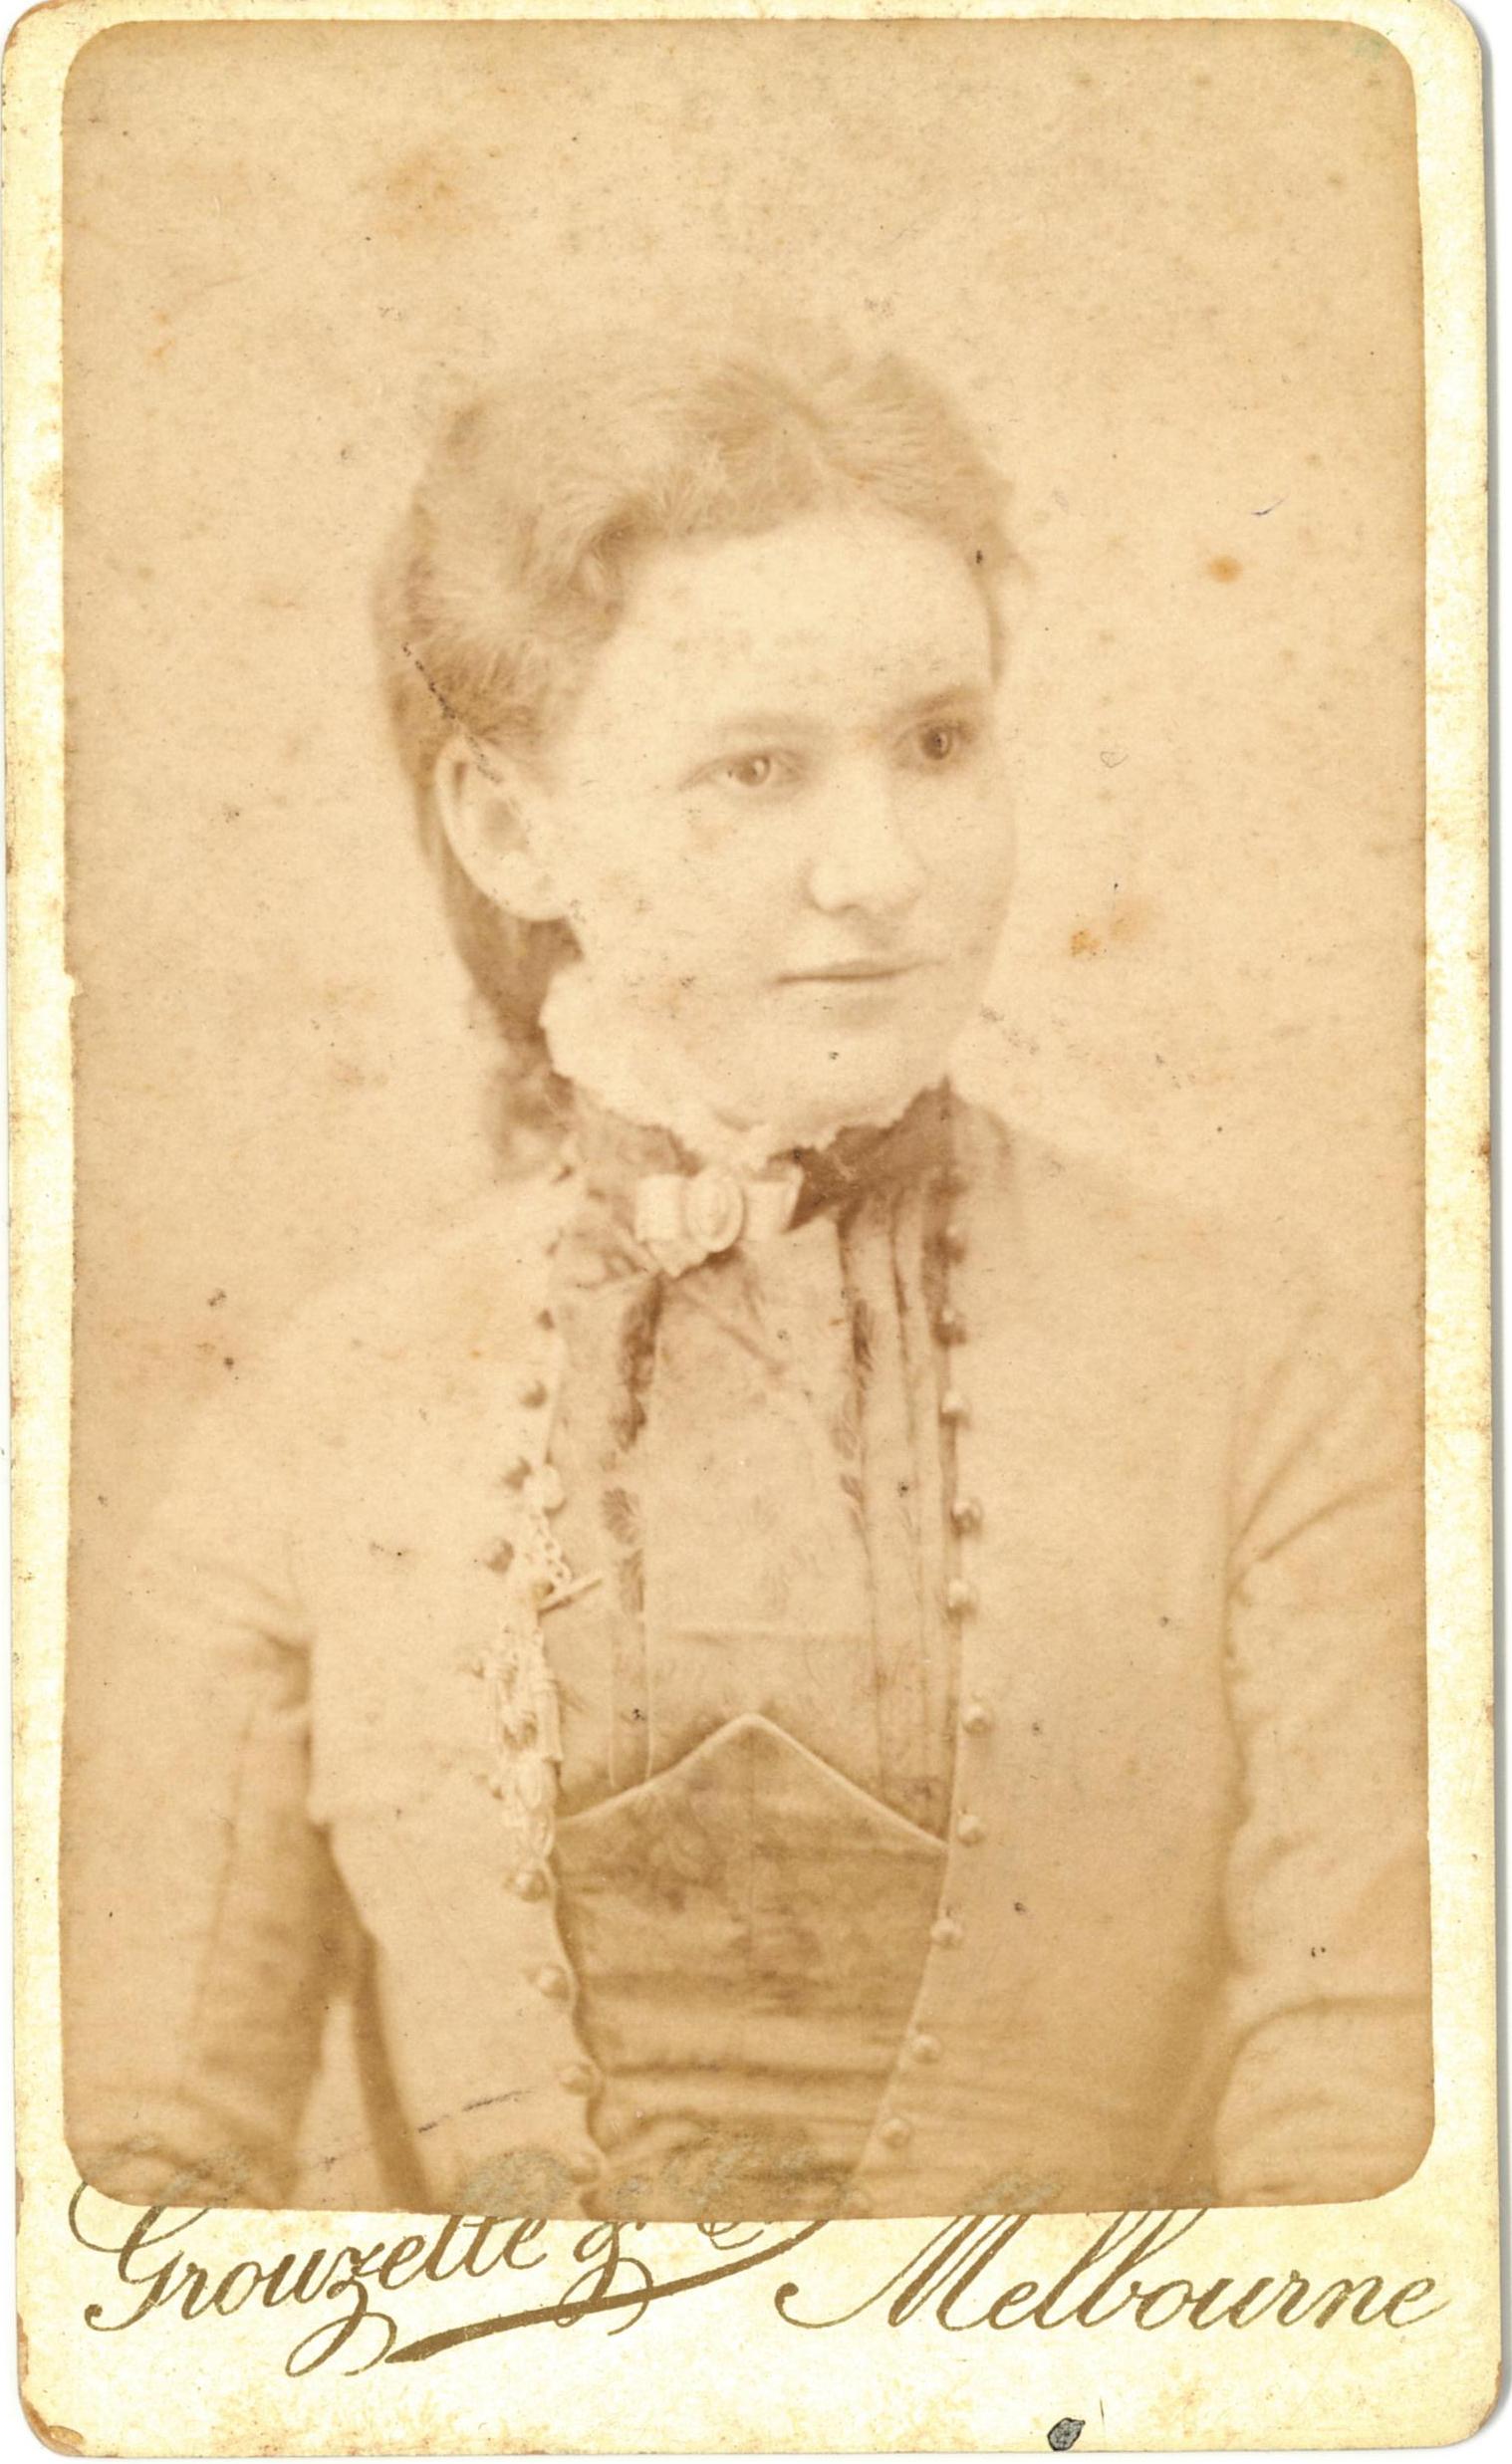 Kennina [Tottie] Fanny McKenzie Thorburn, 1886 / Grouzelle & Cie.